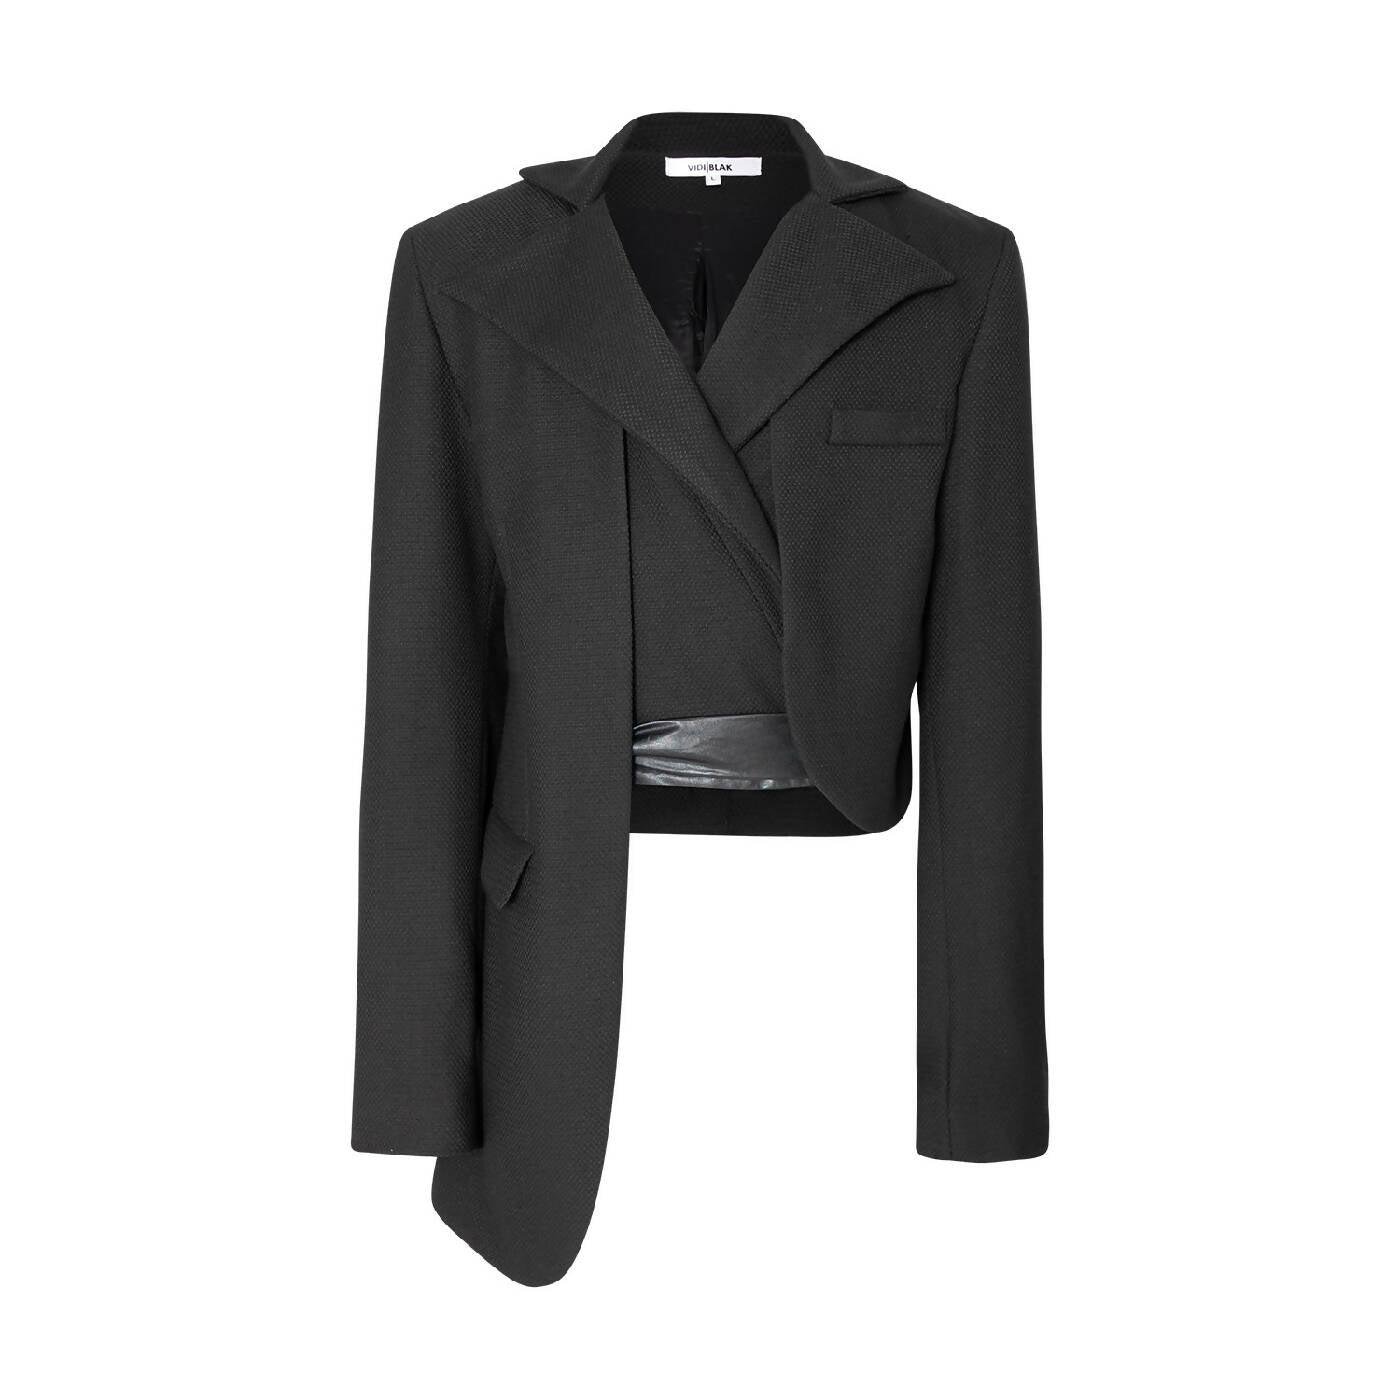 Asymmetric Tailored Jacket With Front Wrap Waistcoat In Black Wool by VIDI BLAK